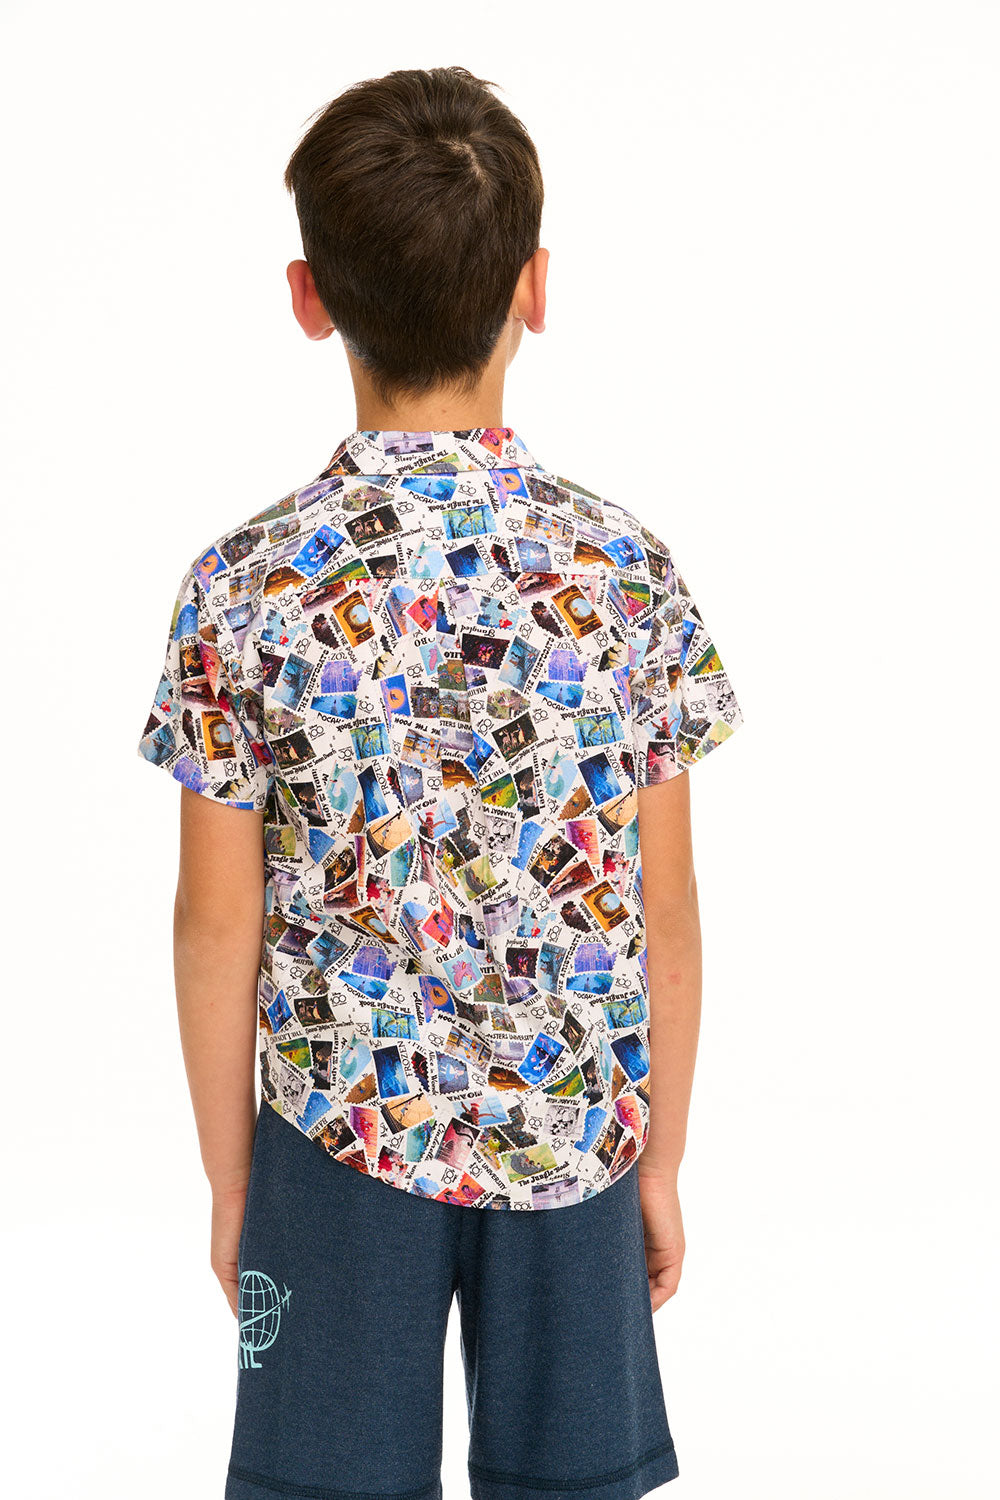 Disney 100 - Air Mail Button Down Shirt BOYS chaserbrand